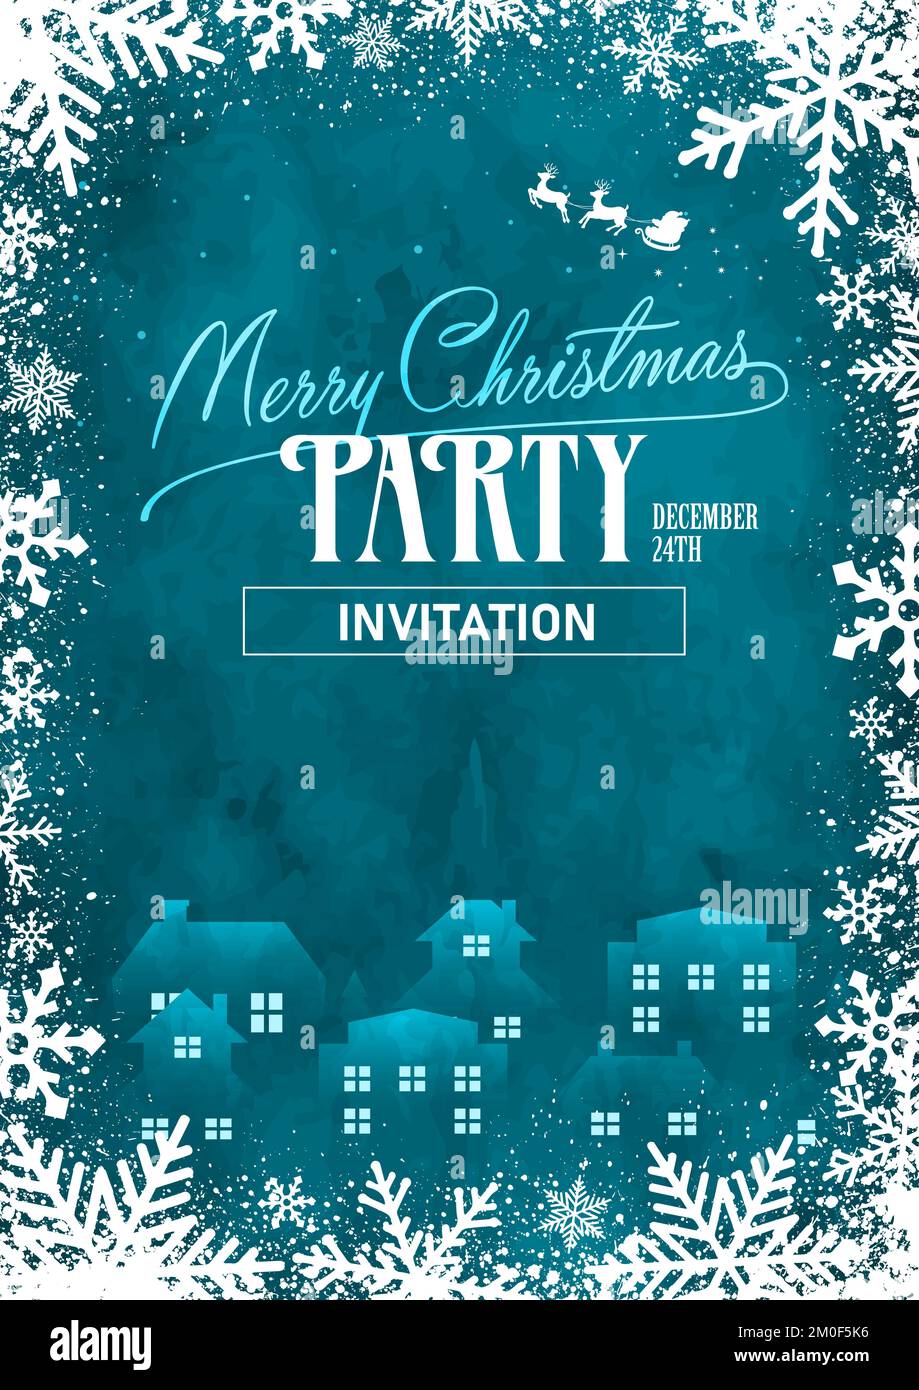 Christmas sale template vector illustration ( snow crystal frame )  |   ( A4-sized | portrait ) Stock Vector